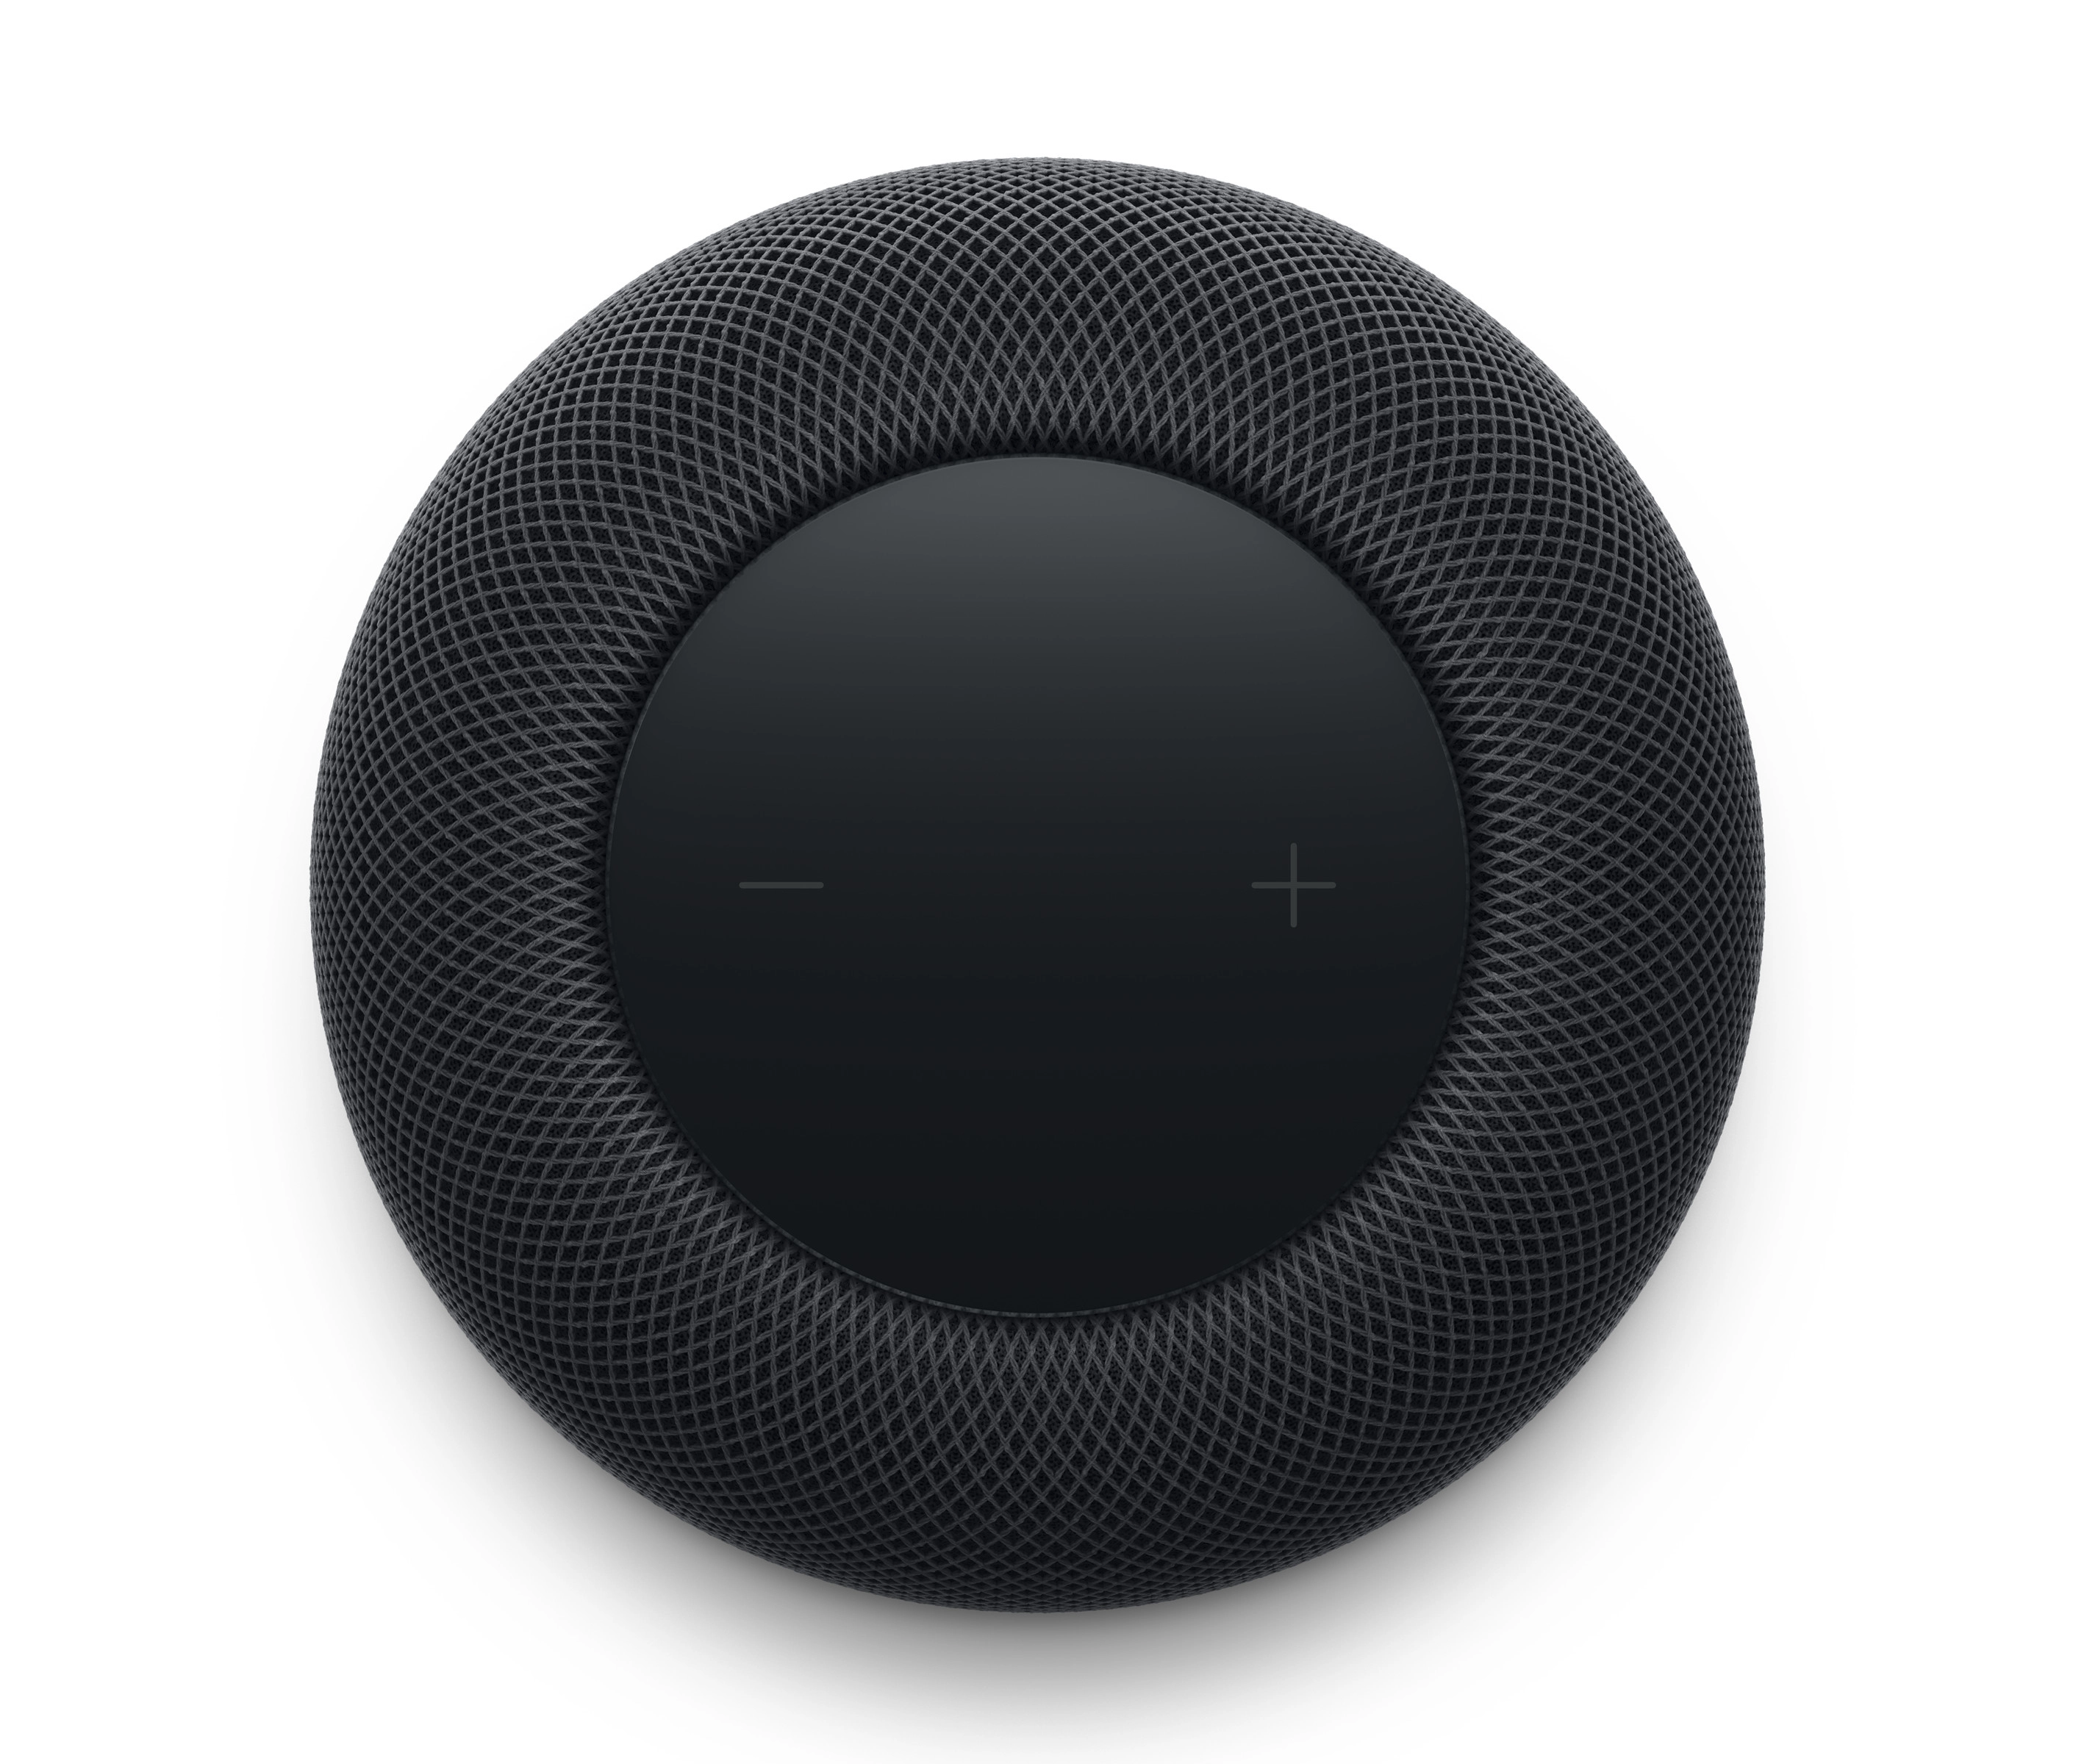 Apple HomePod (2nd generation) - Smart-Lautsprecher